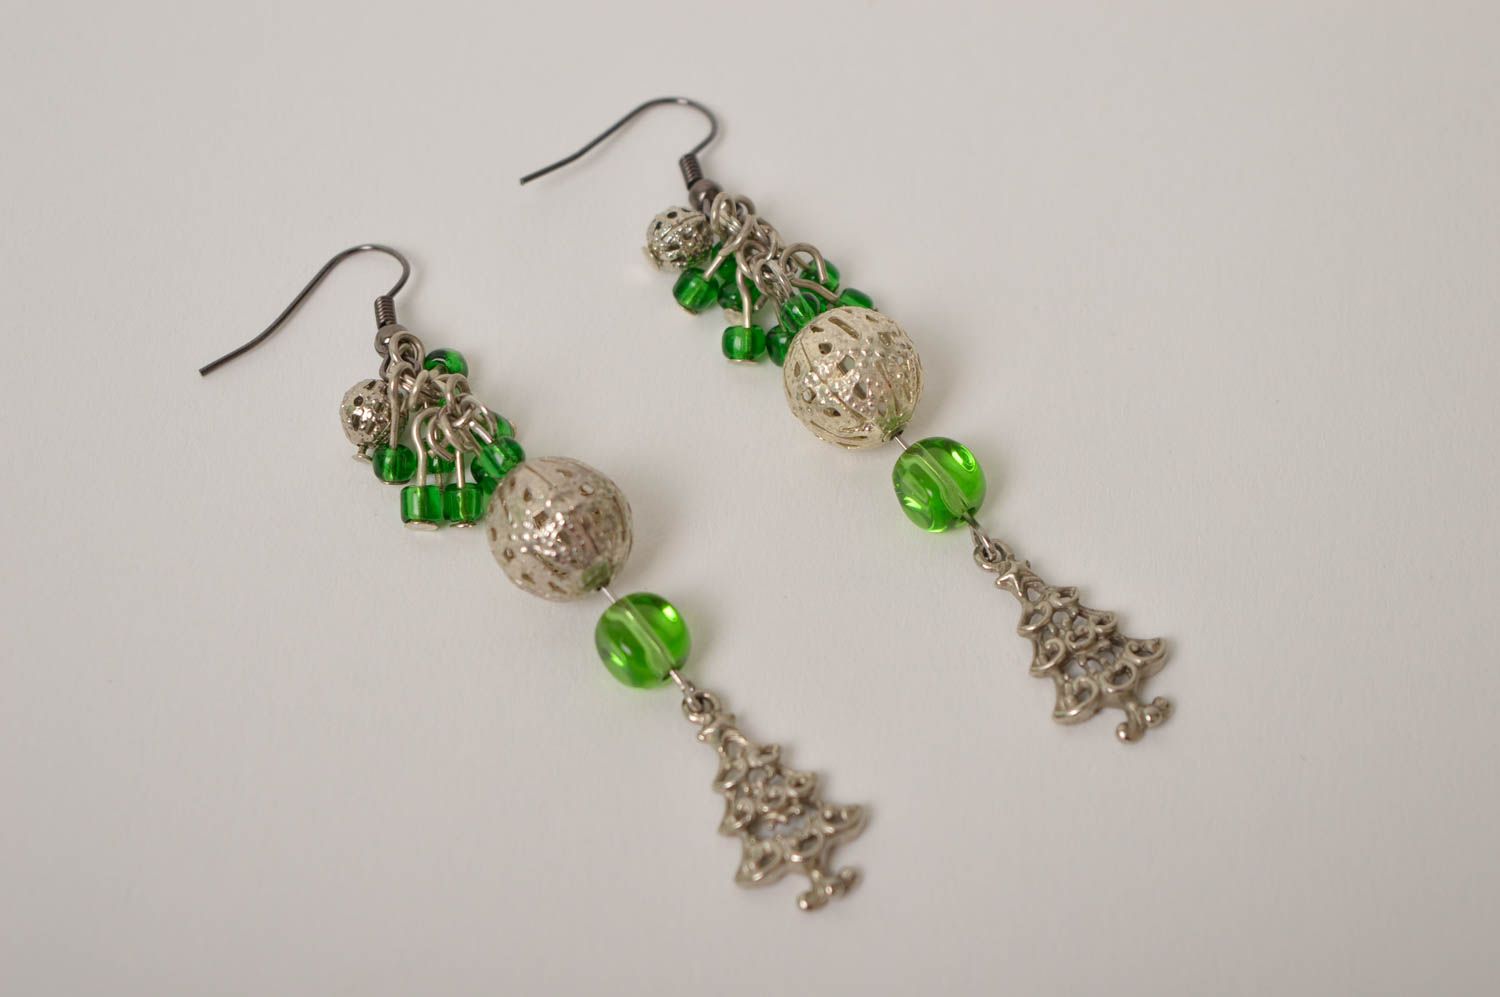 Handmade earrings with charms designer dangling earrings elegant accessory photo 3